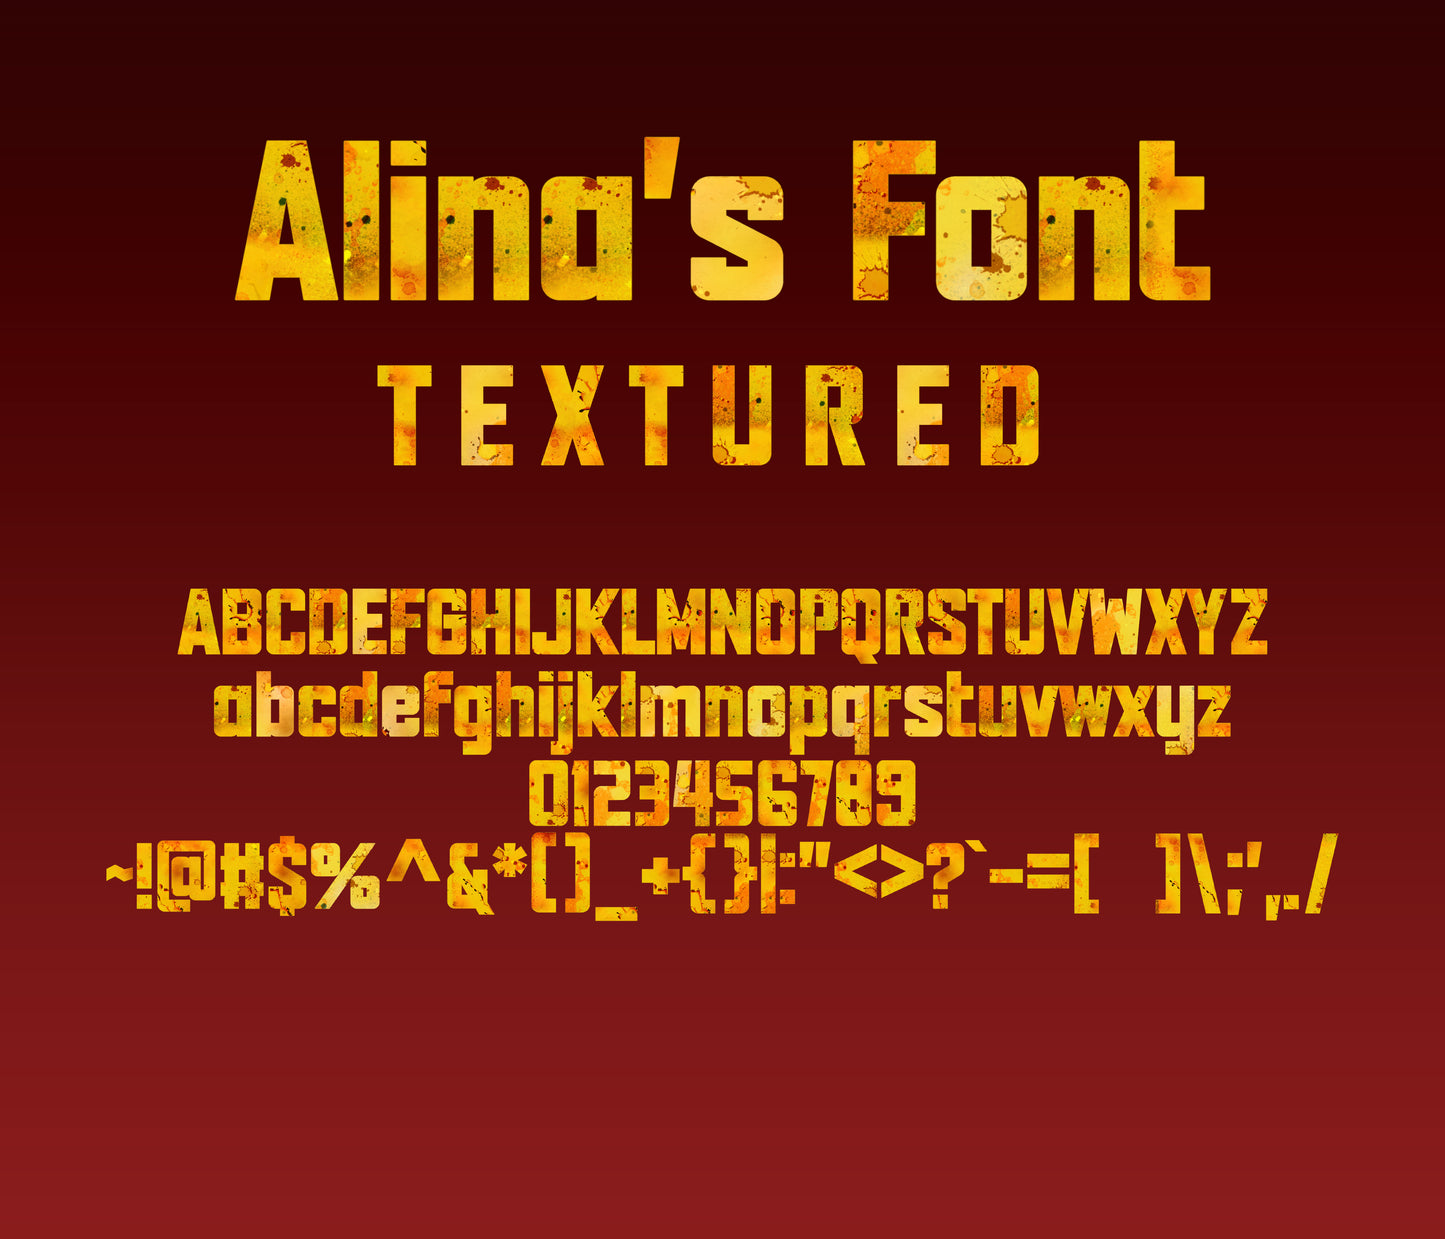 Furiosa A Mad Max Saga Textured Font